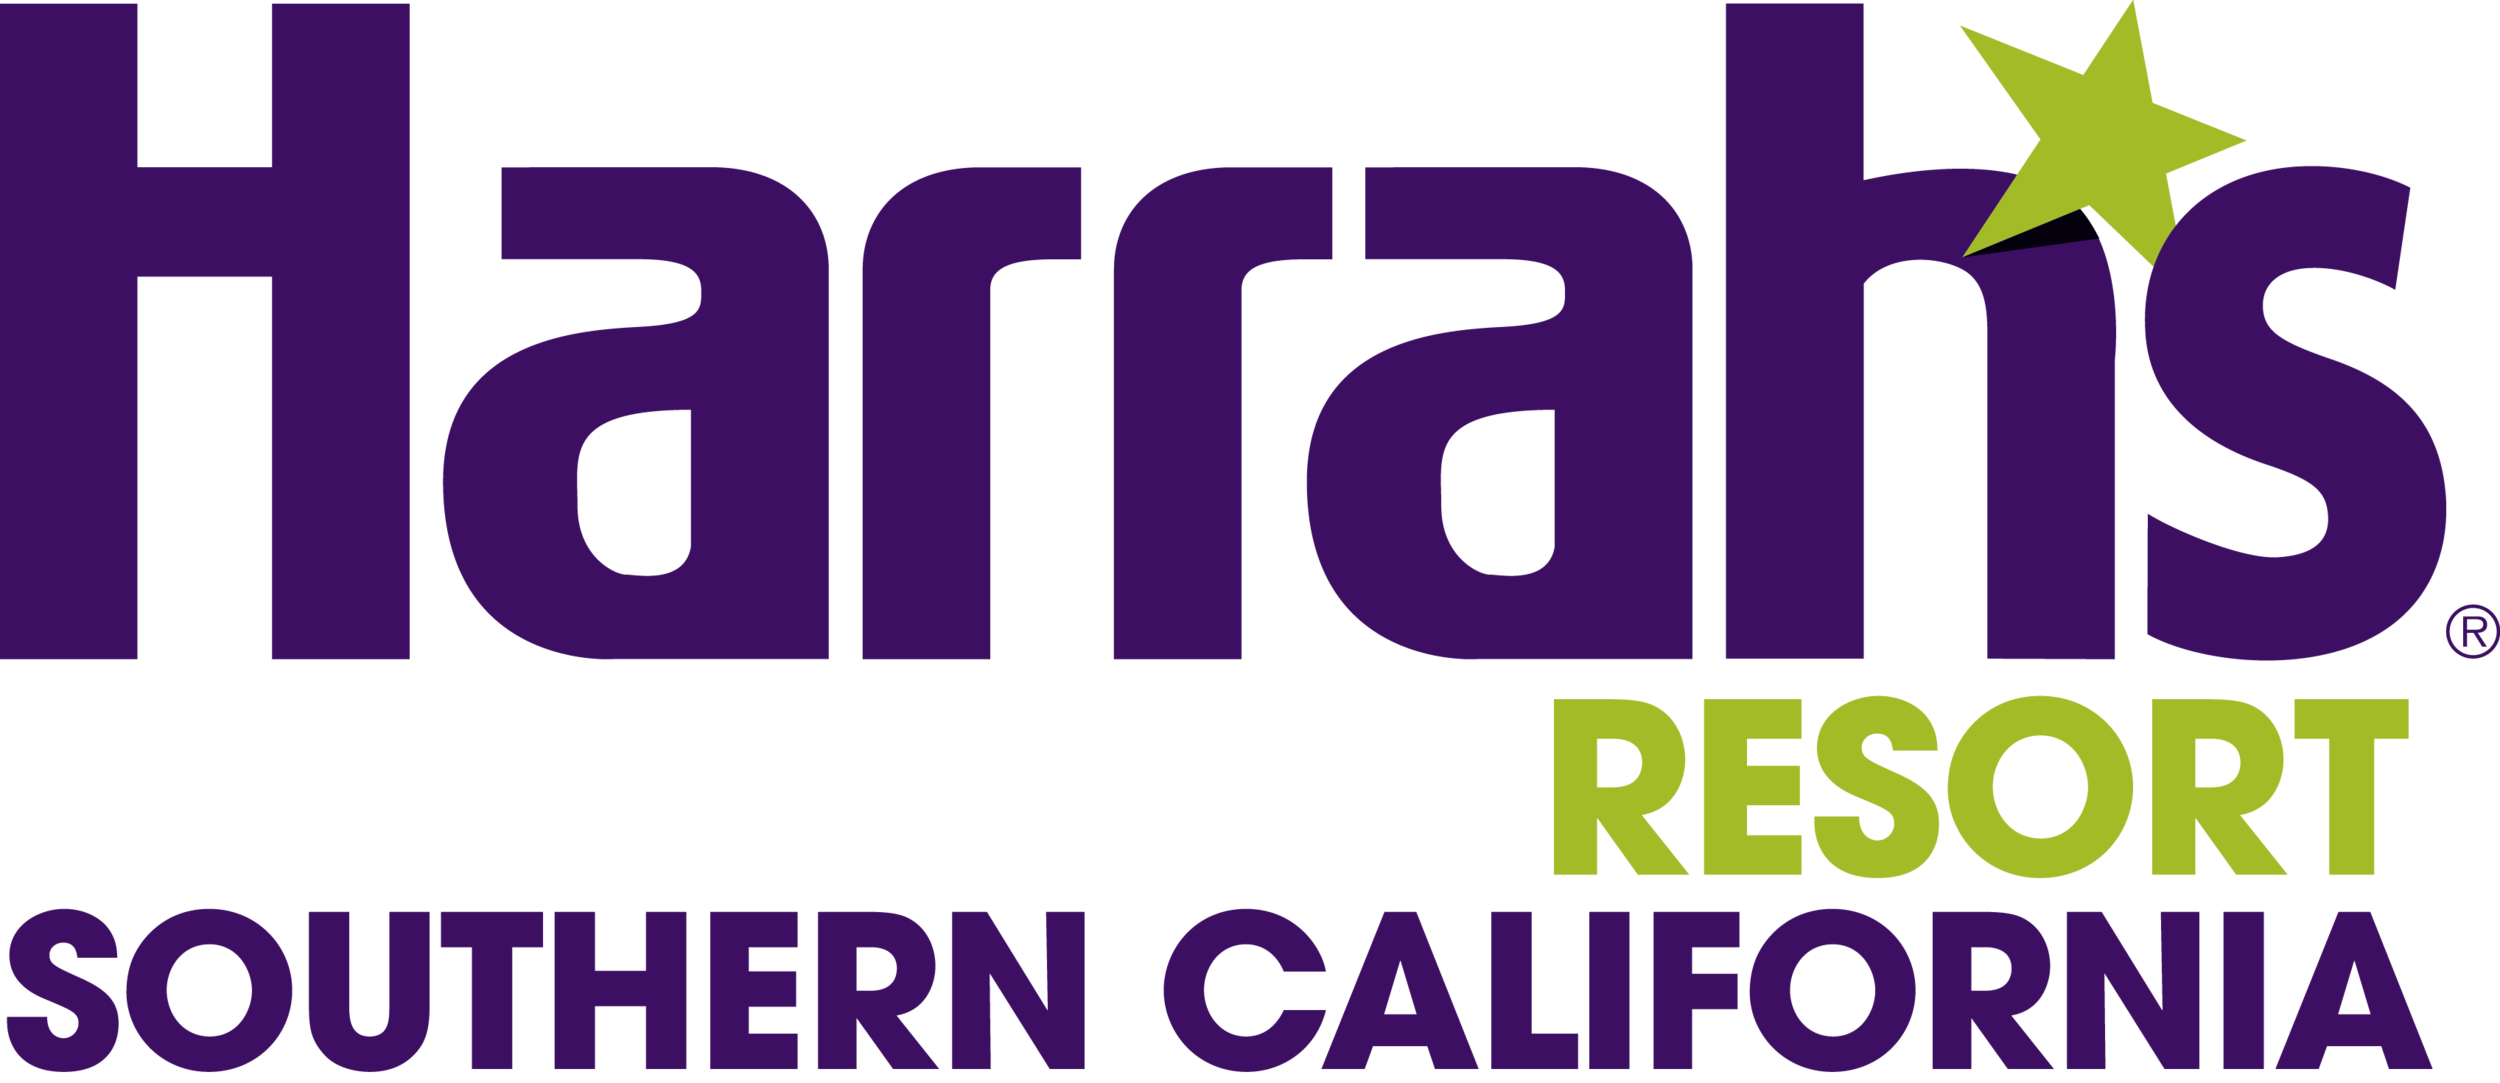 Harrah's_Resort_Southern_California_casino_logo.png